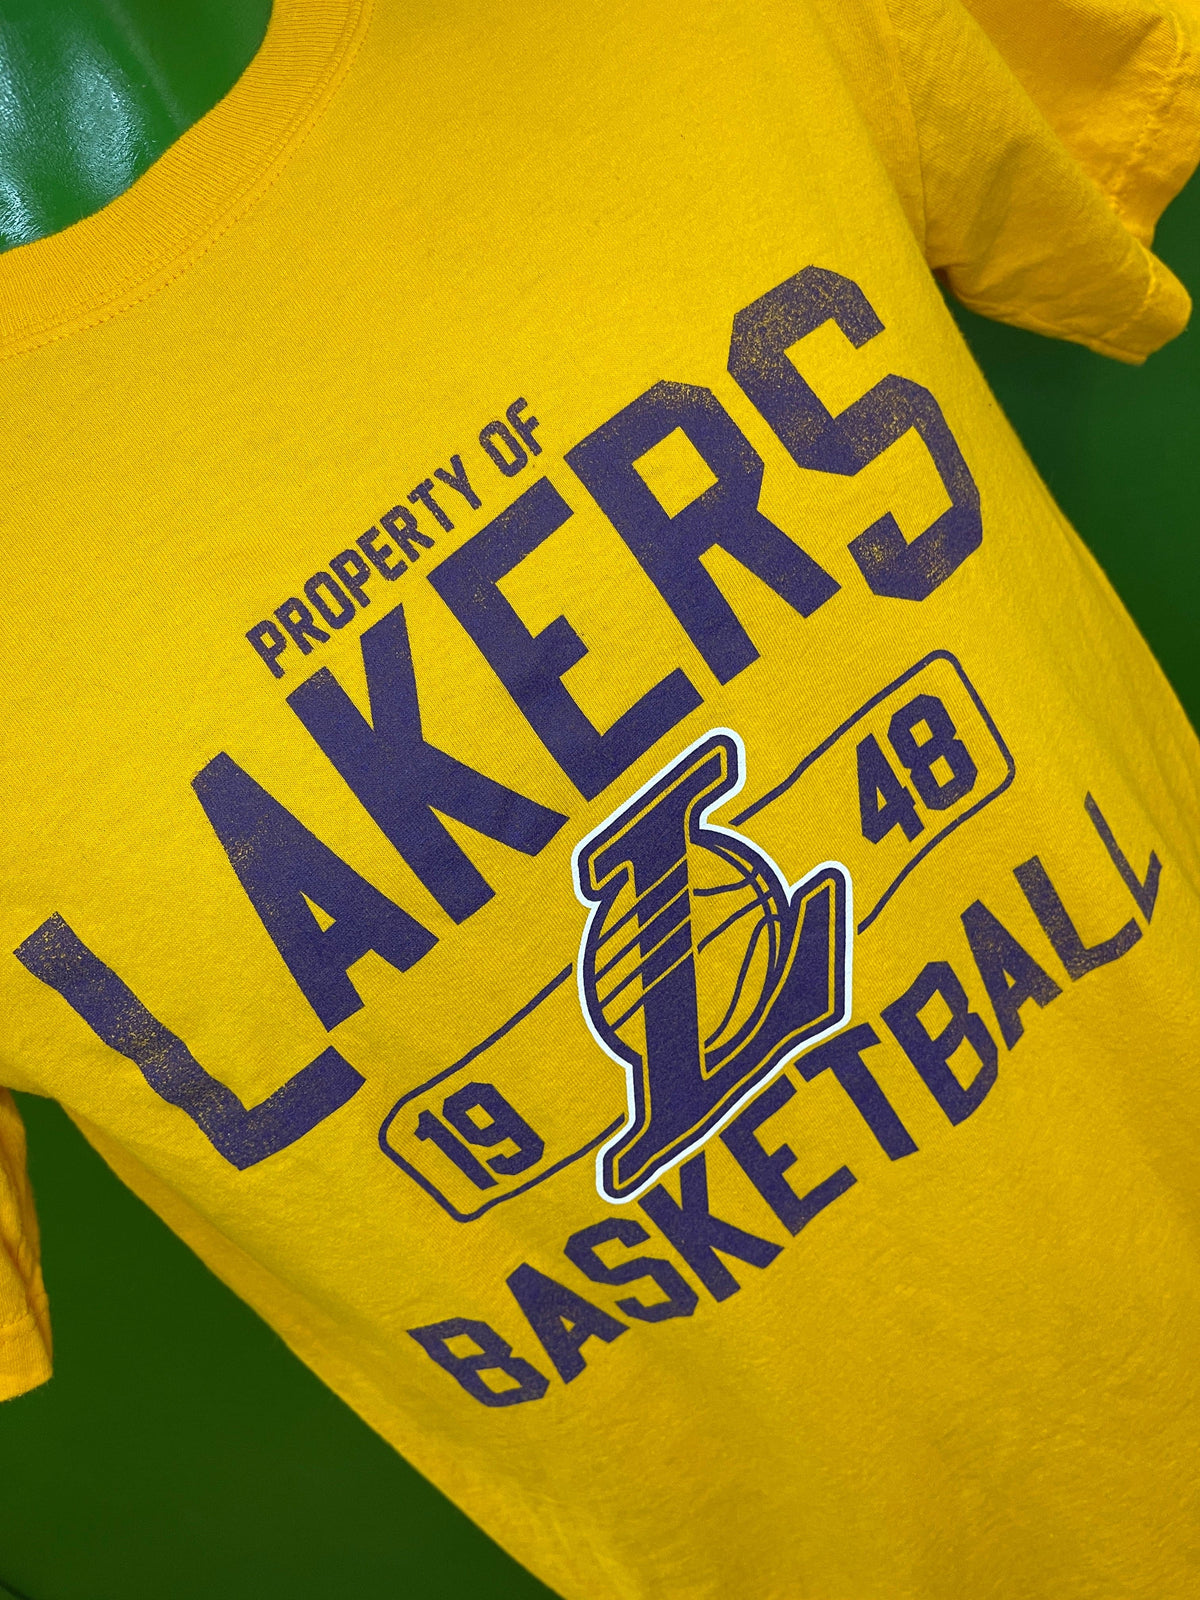 NBA Los Angeles Lakers "Property Of" T-Shirt Men's Small